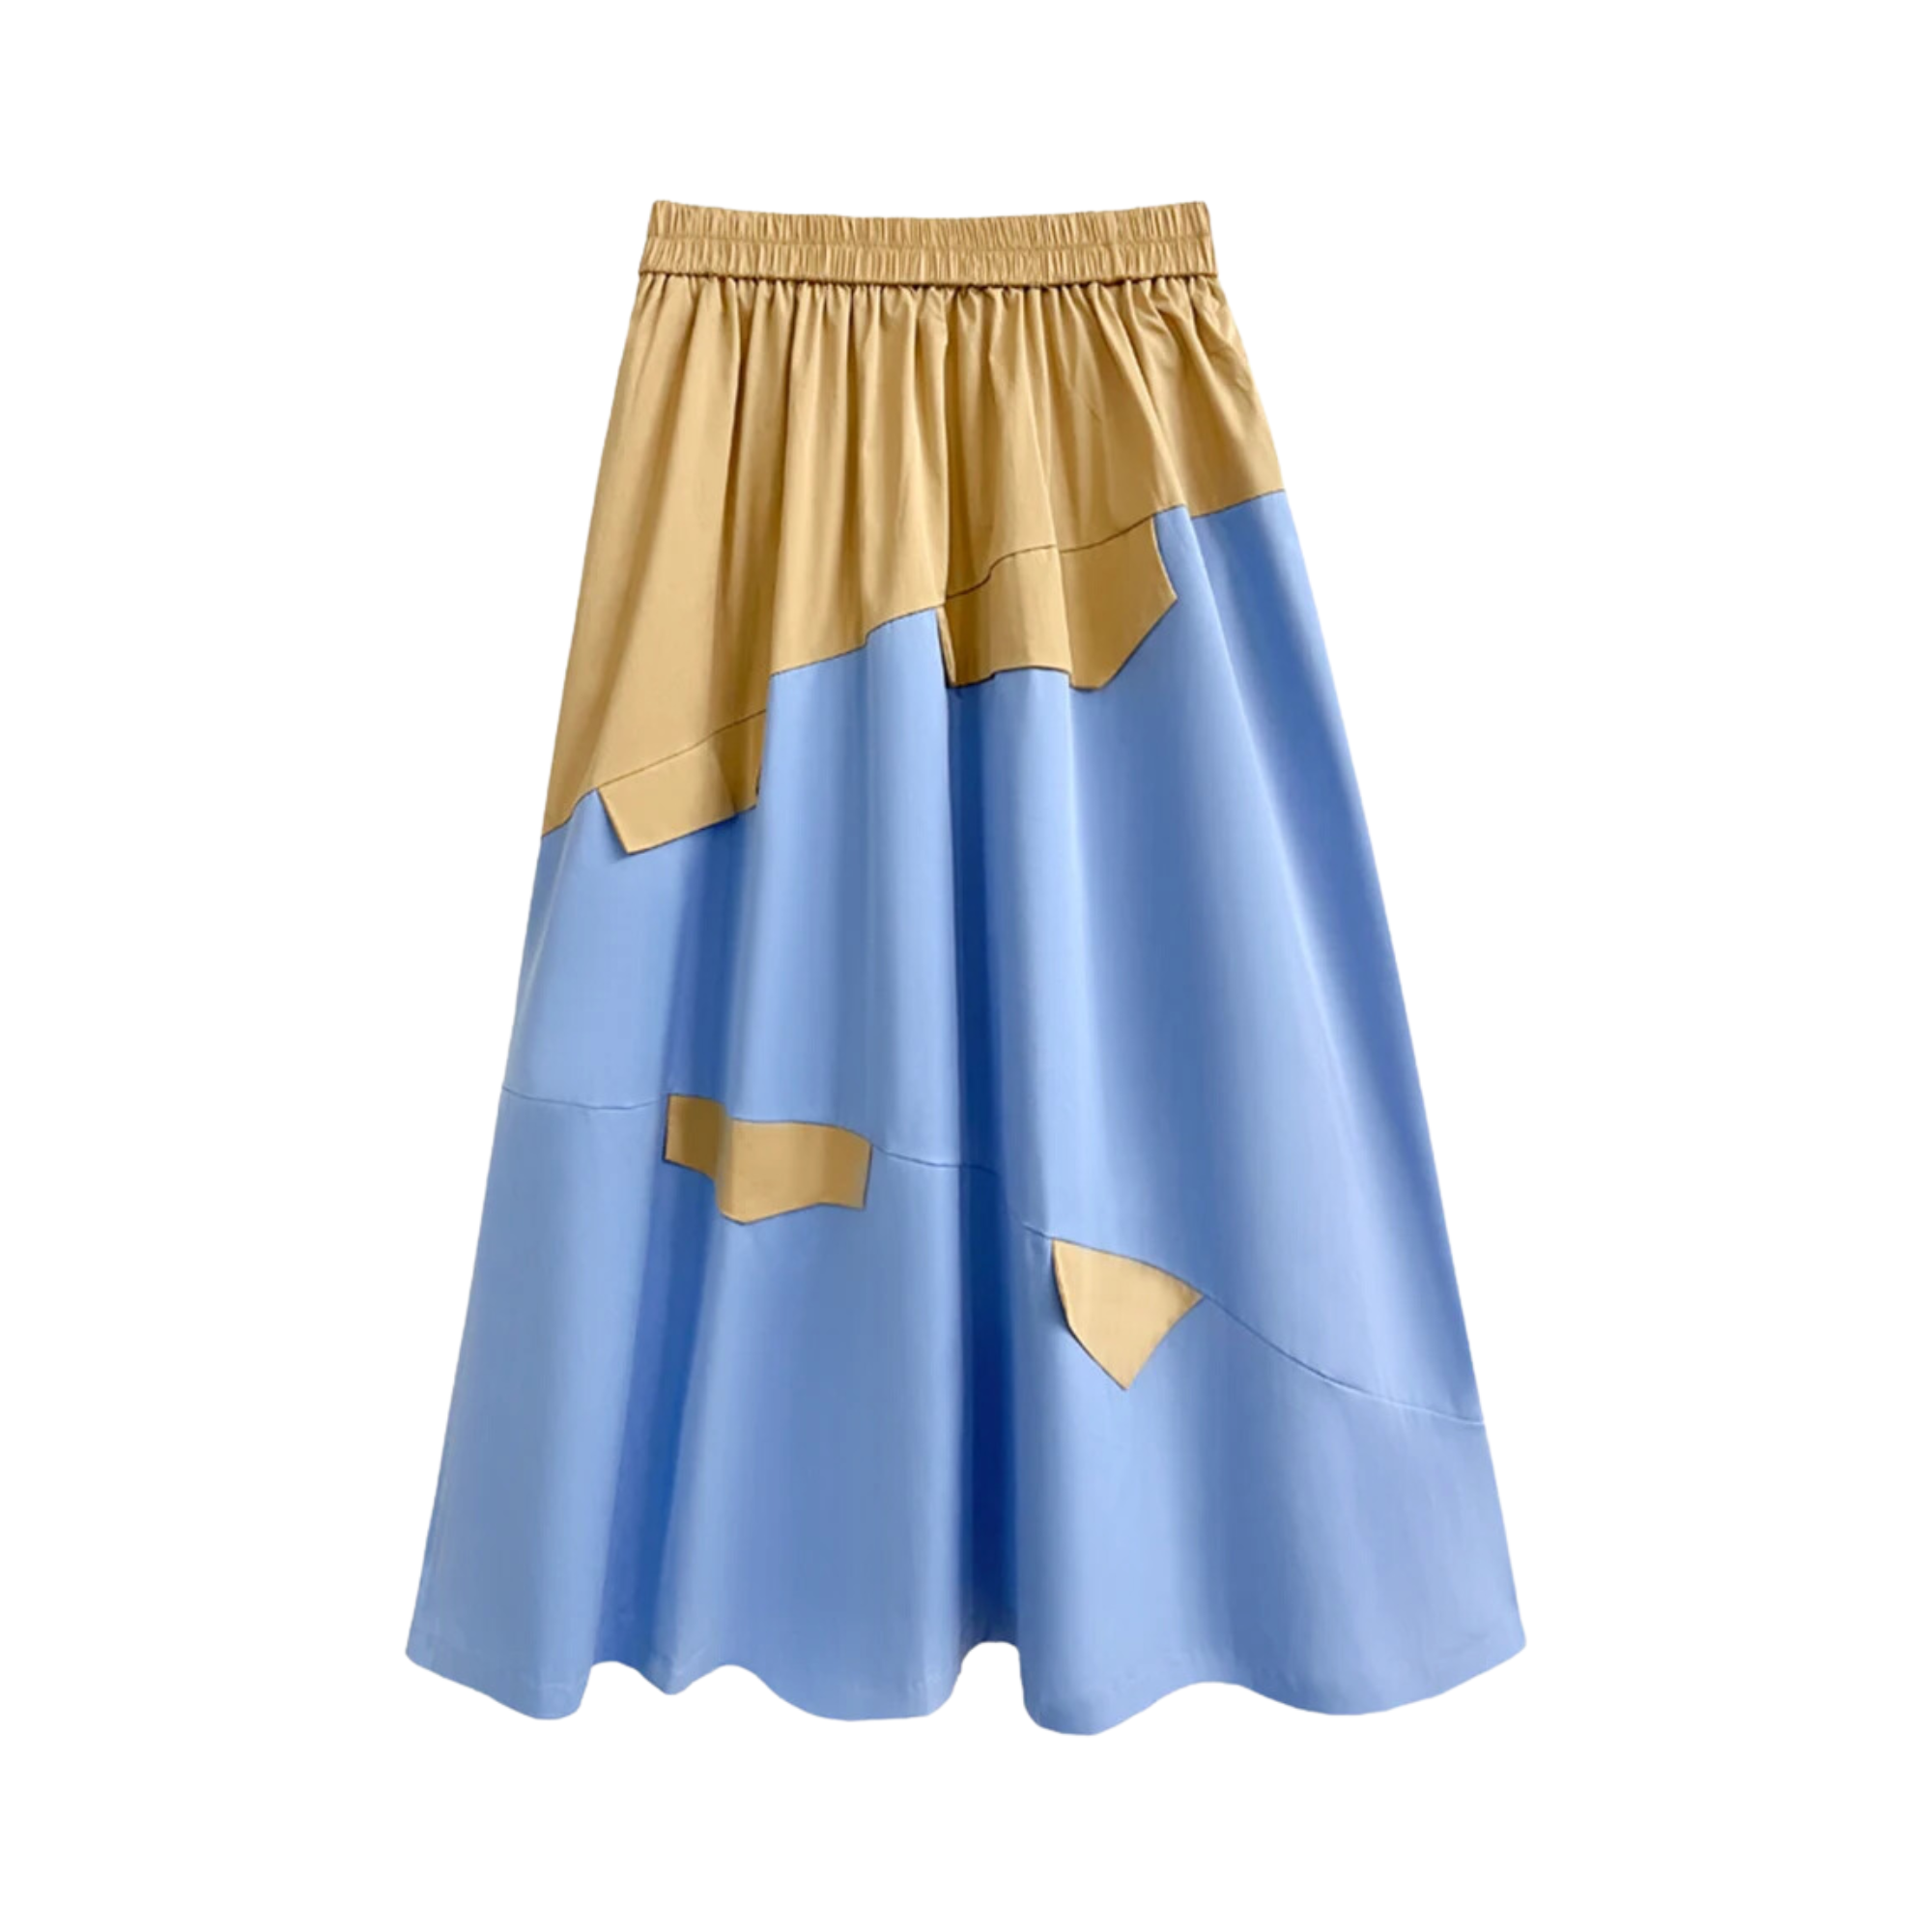 Flaps Mid-Calf Spliced Cotton Skirt - Pre Order: Ships Feb 29